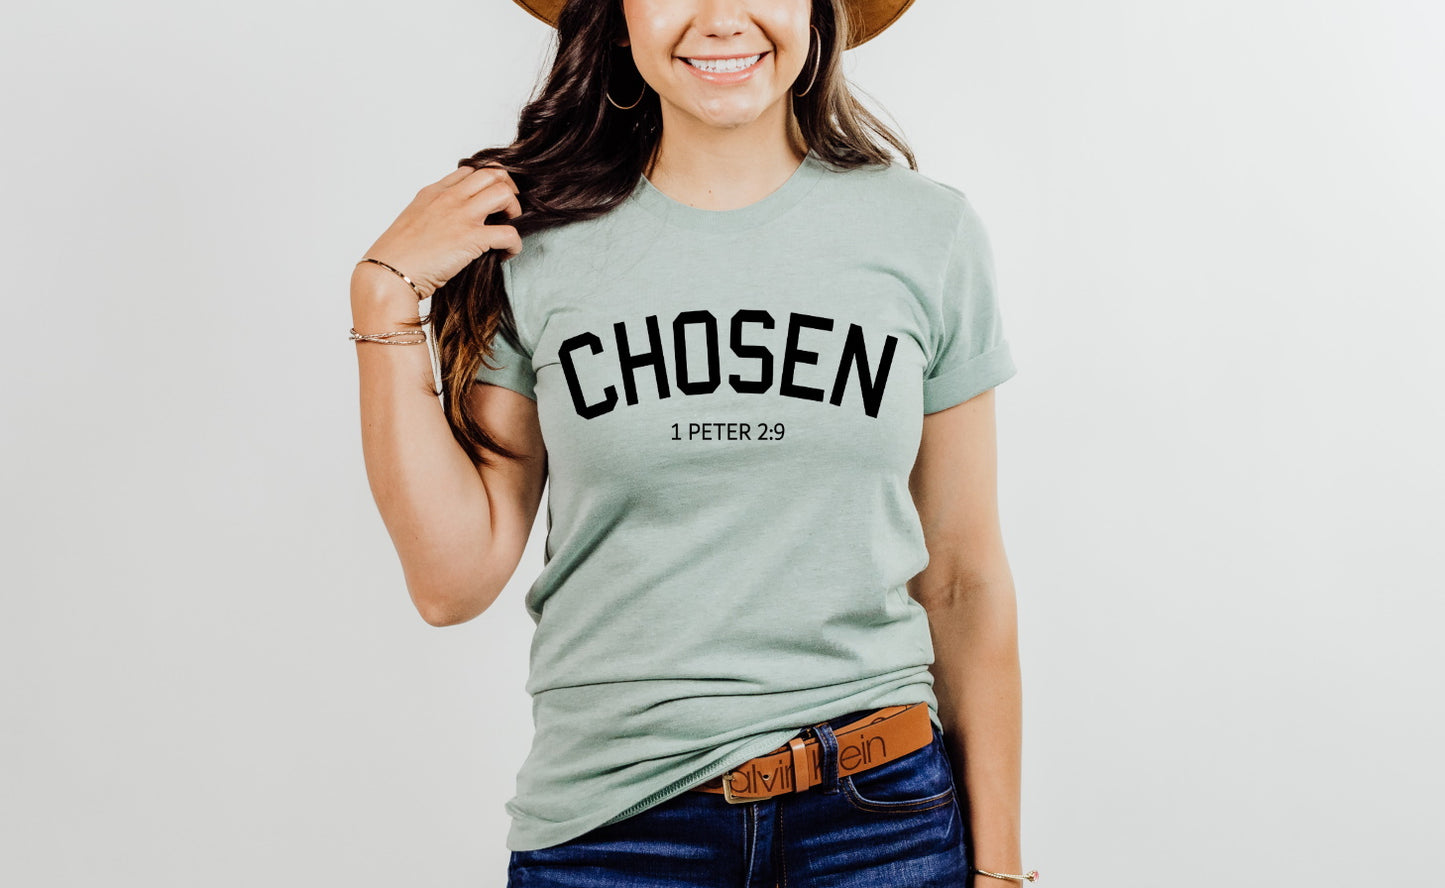 Chosen 1 Peter 2:9, Faith Shirt, Jesus Love, Christian Gift Unisex Tee Novelty T-Shirt